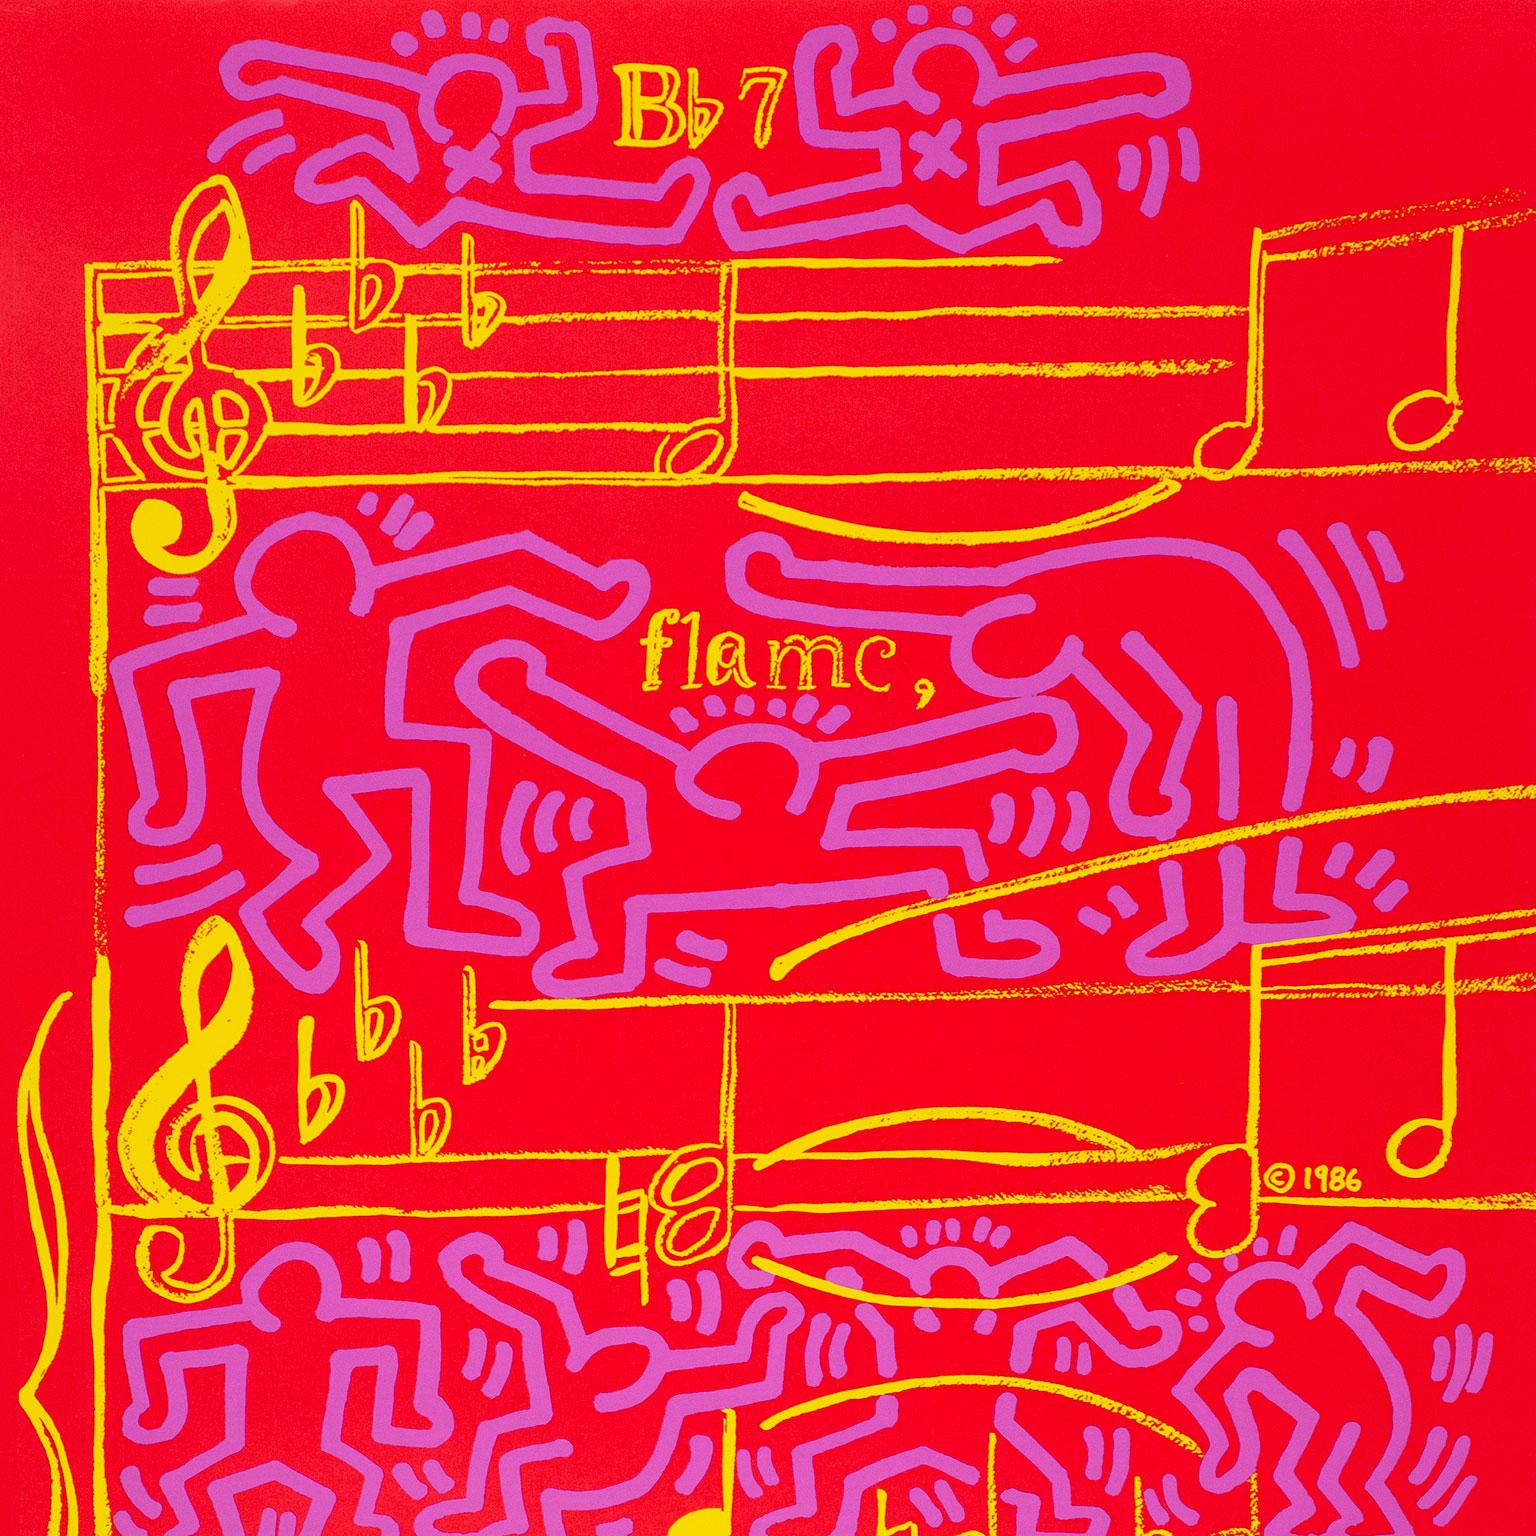 Montreux-Detroit Jazz Festival 1986 - Pop Art Print by Andy Warhol